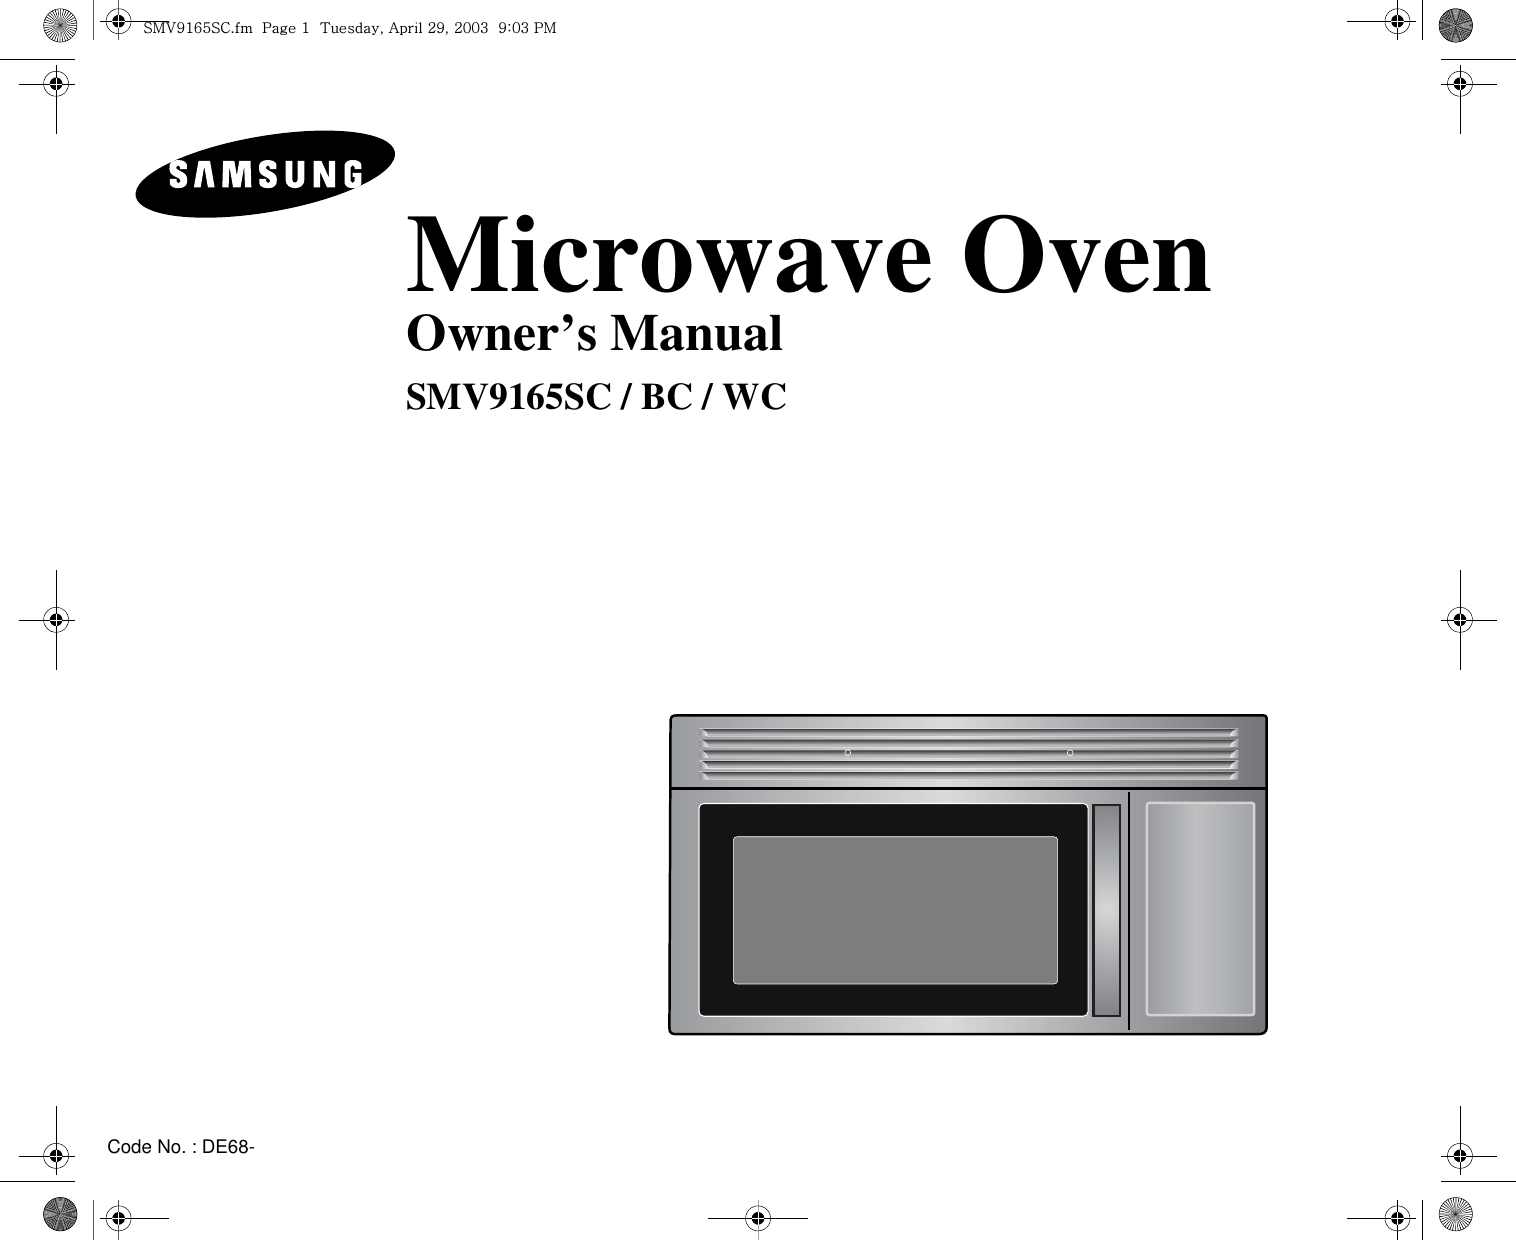 Code No. : DE68-Microwave OvenOwner’s ManualSMV9165SC / BC / WCzt}`X]\zjUGGwGXGG{SGhGY`SGYWWZGG`aWZGwt